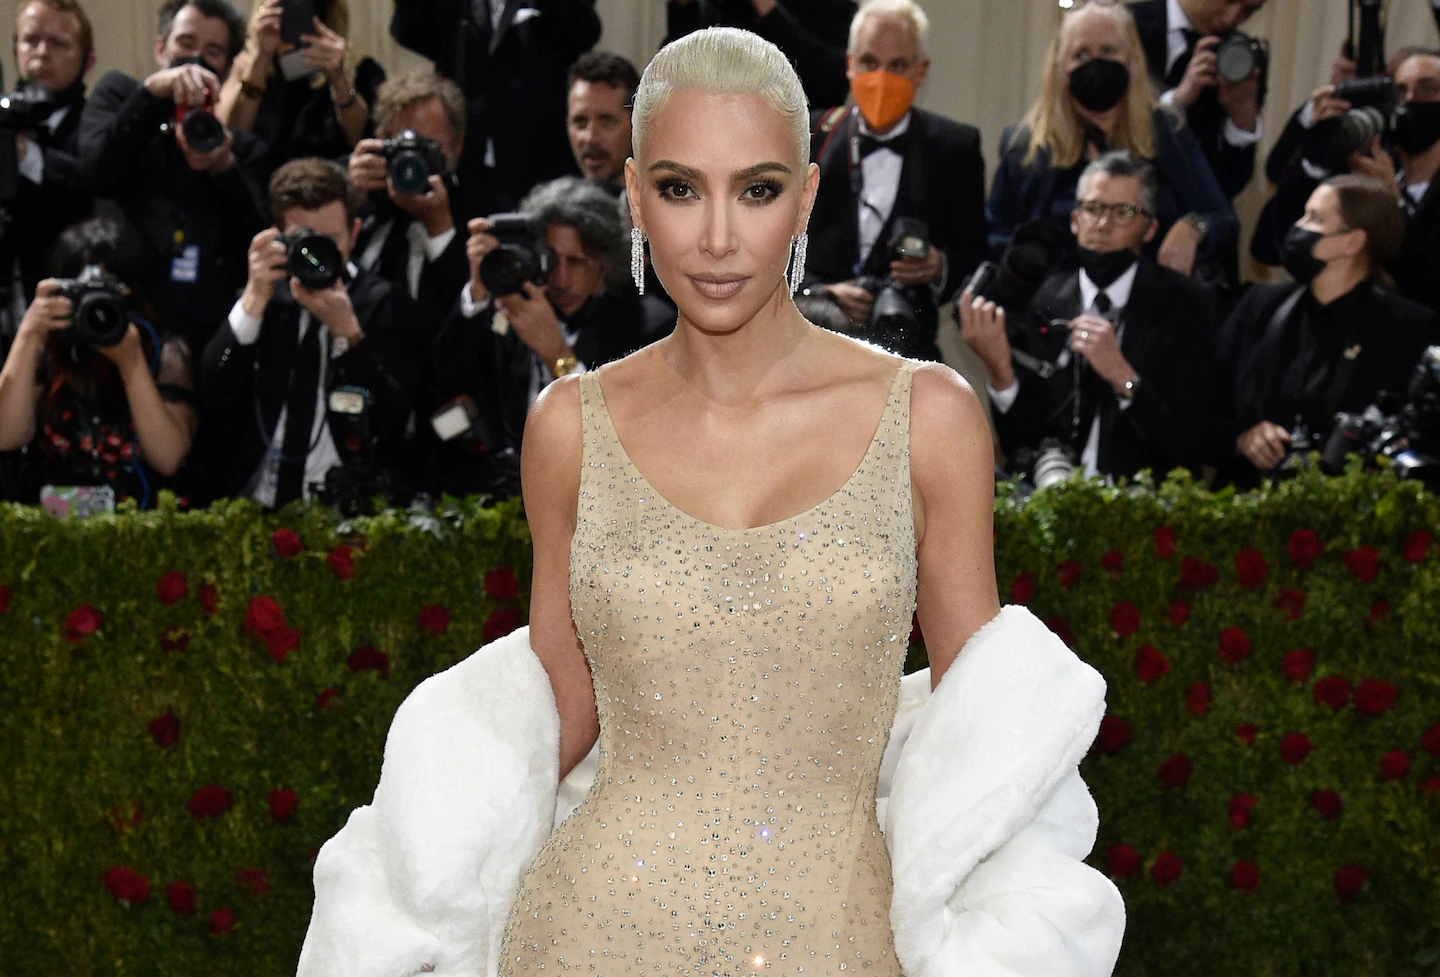 Kim Kardashian did not damage Marilyn Monroe’s dress, Ripley’s says